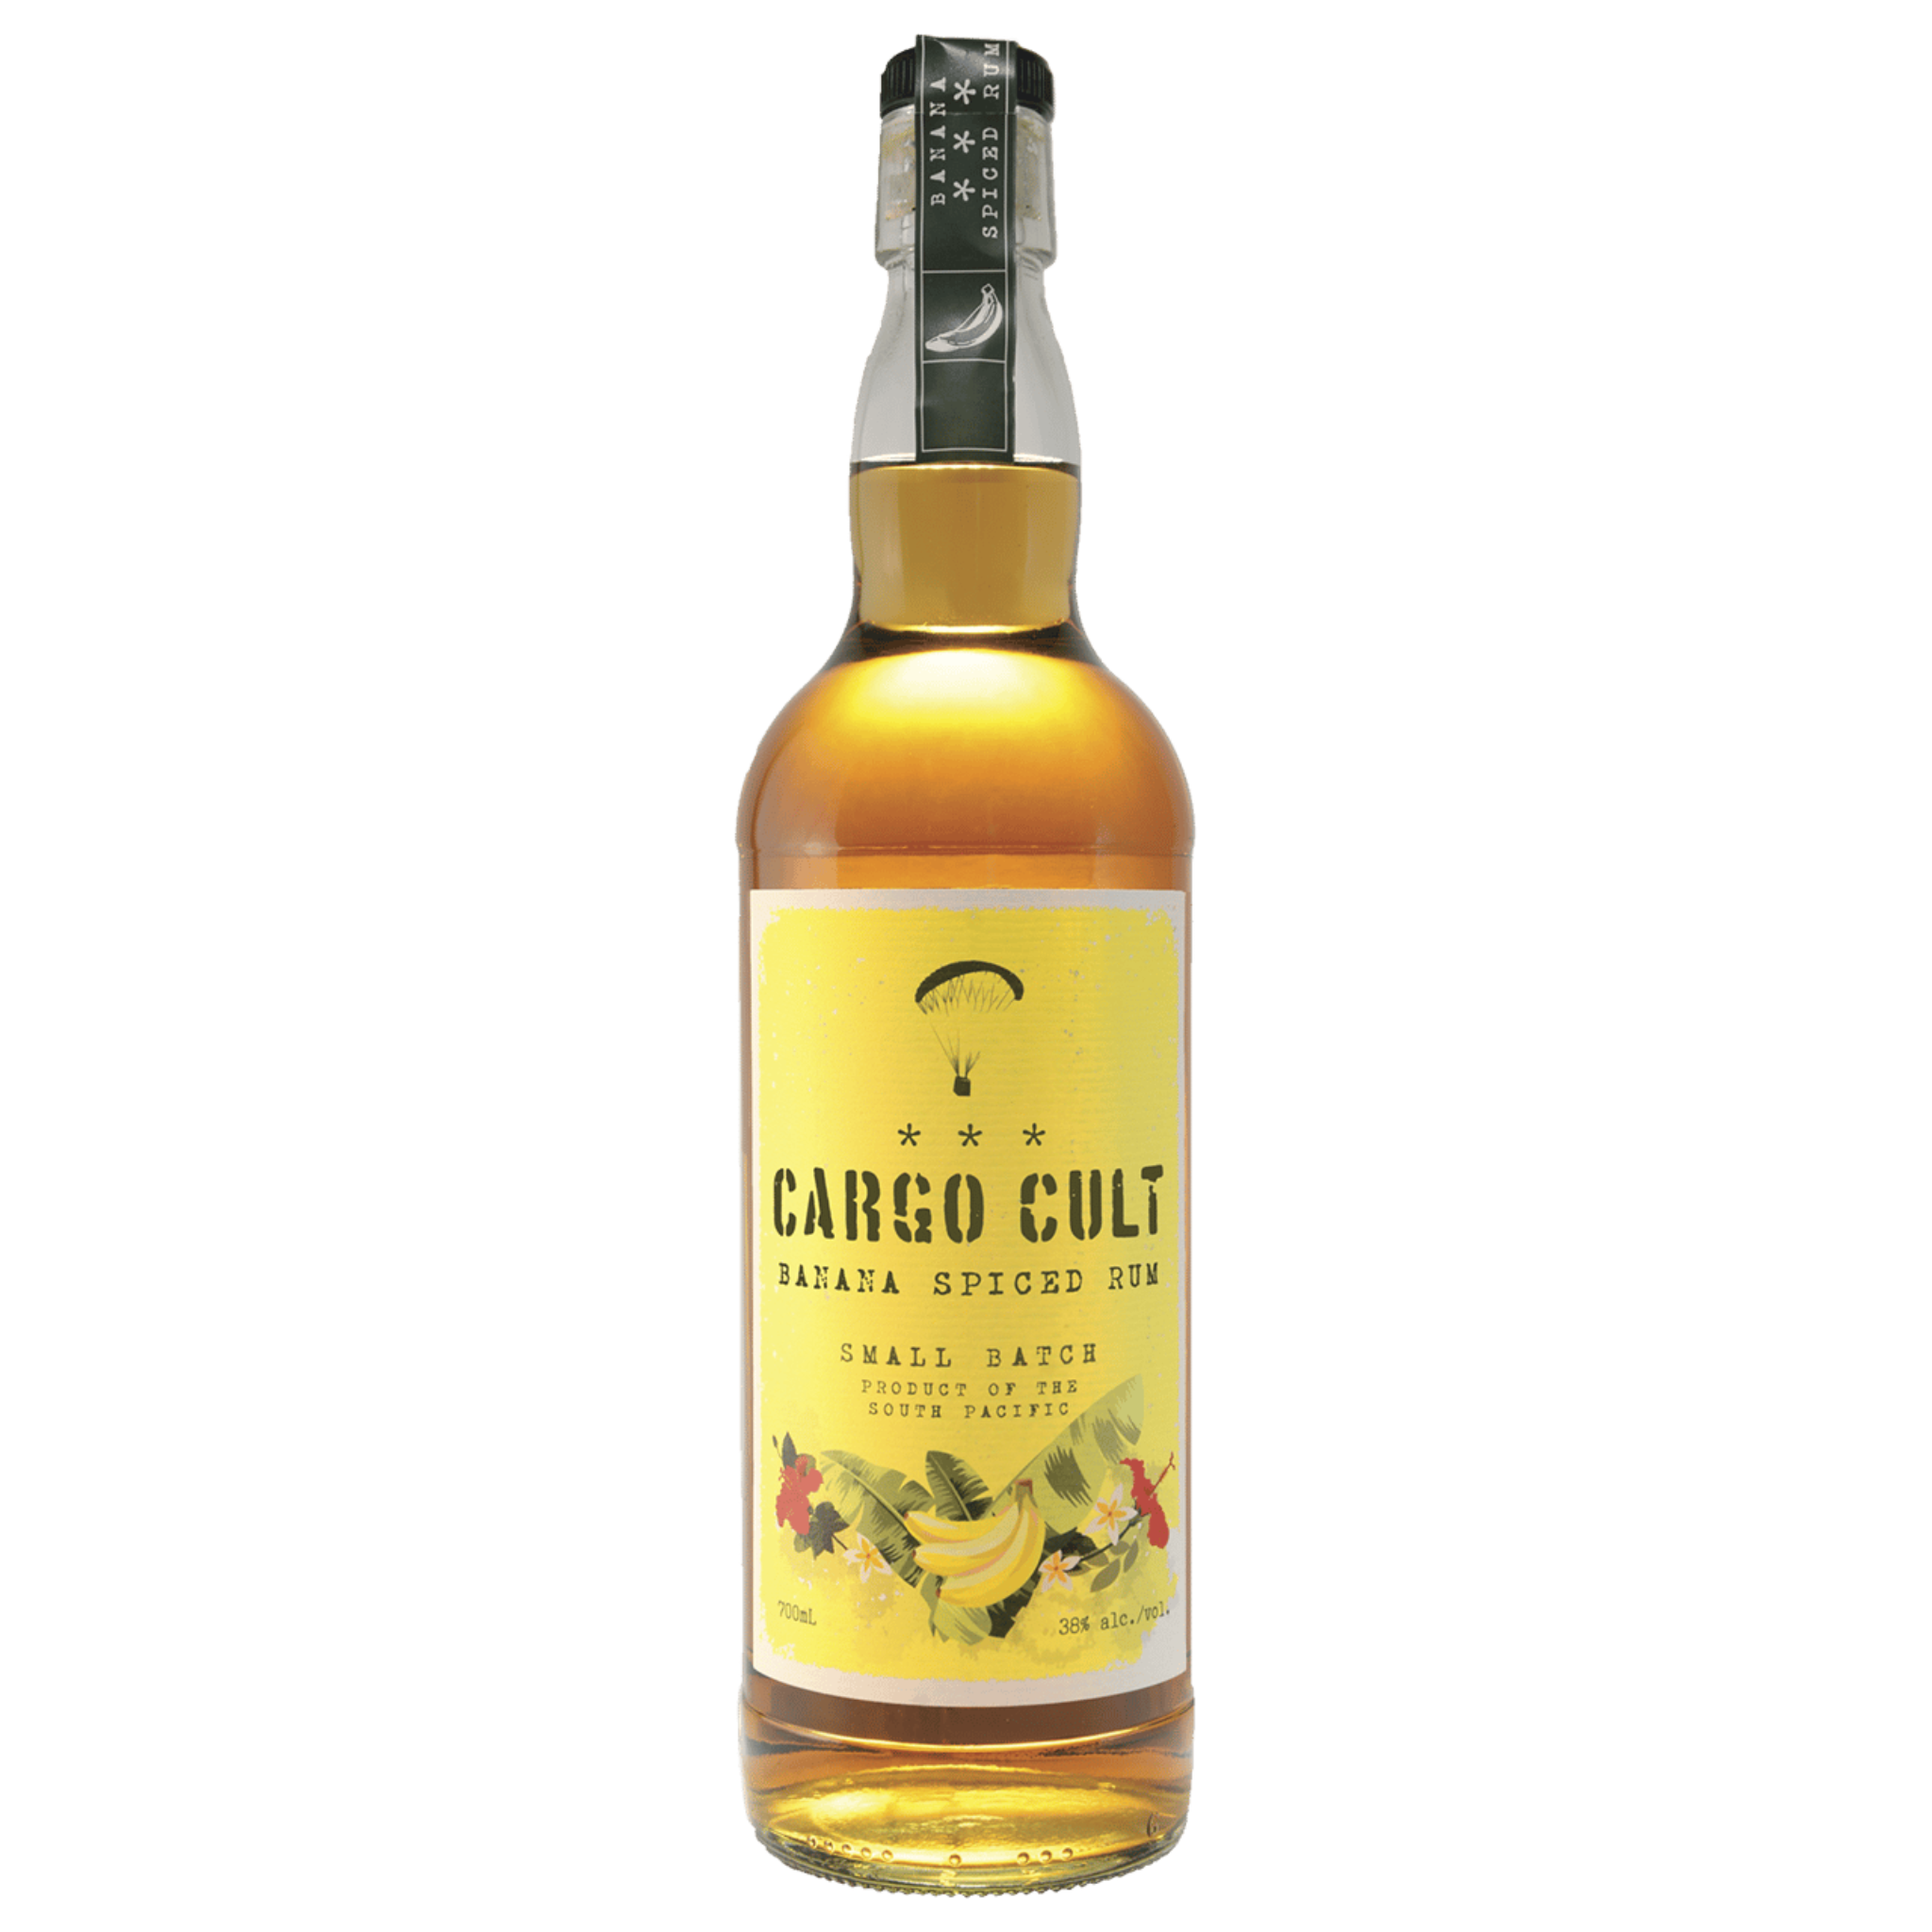 Canerock Spiced Rum (700ml)